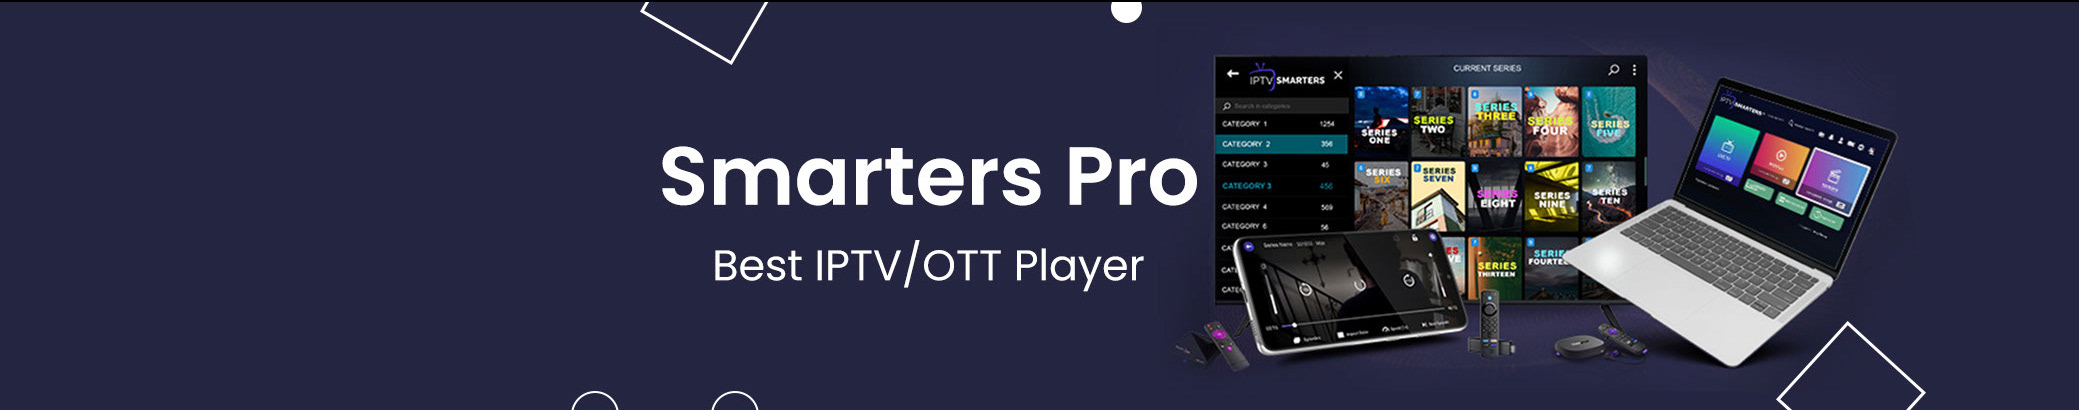 smarters pro's profile banner